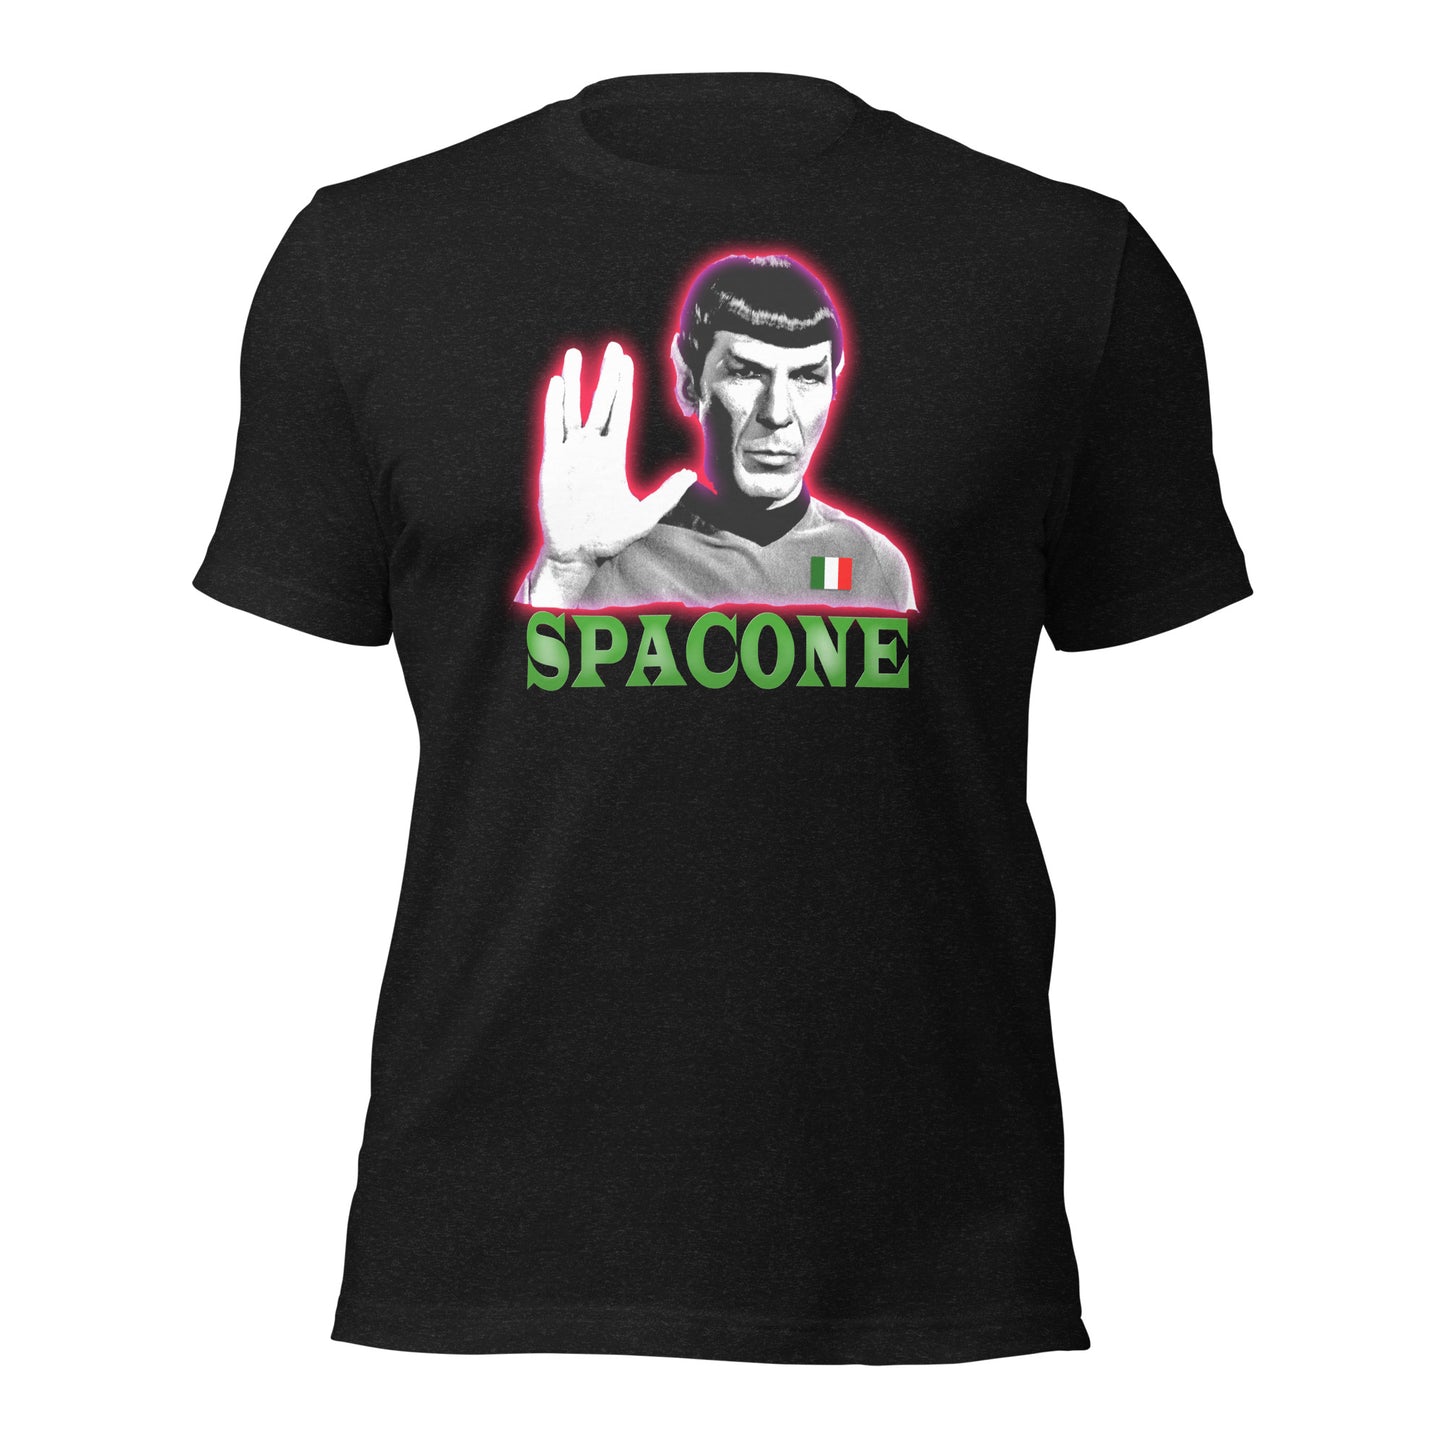 Spacone - Unisex t-shirt